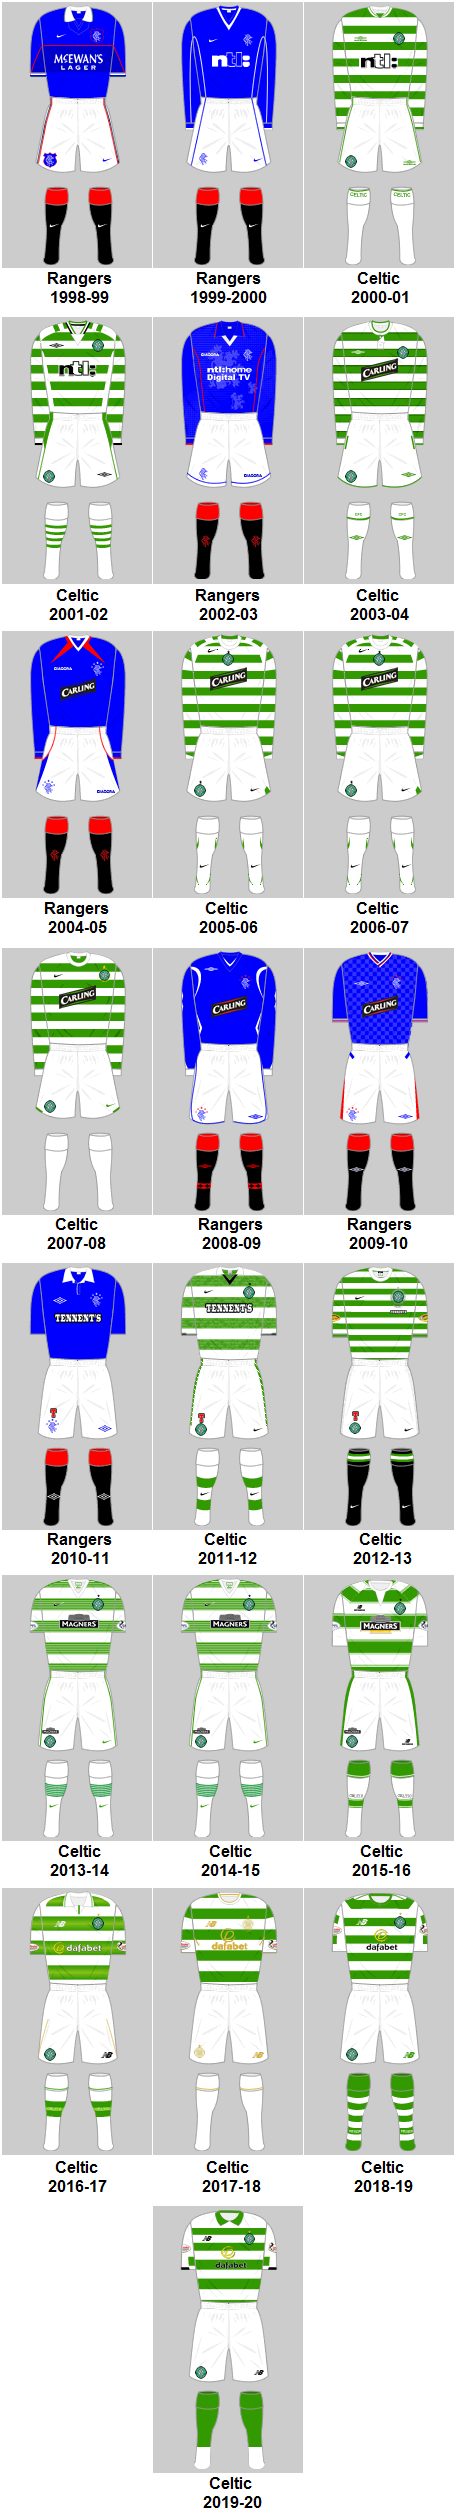 Scottish Premiership Champions Football Kits